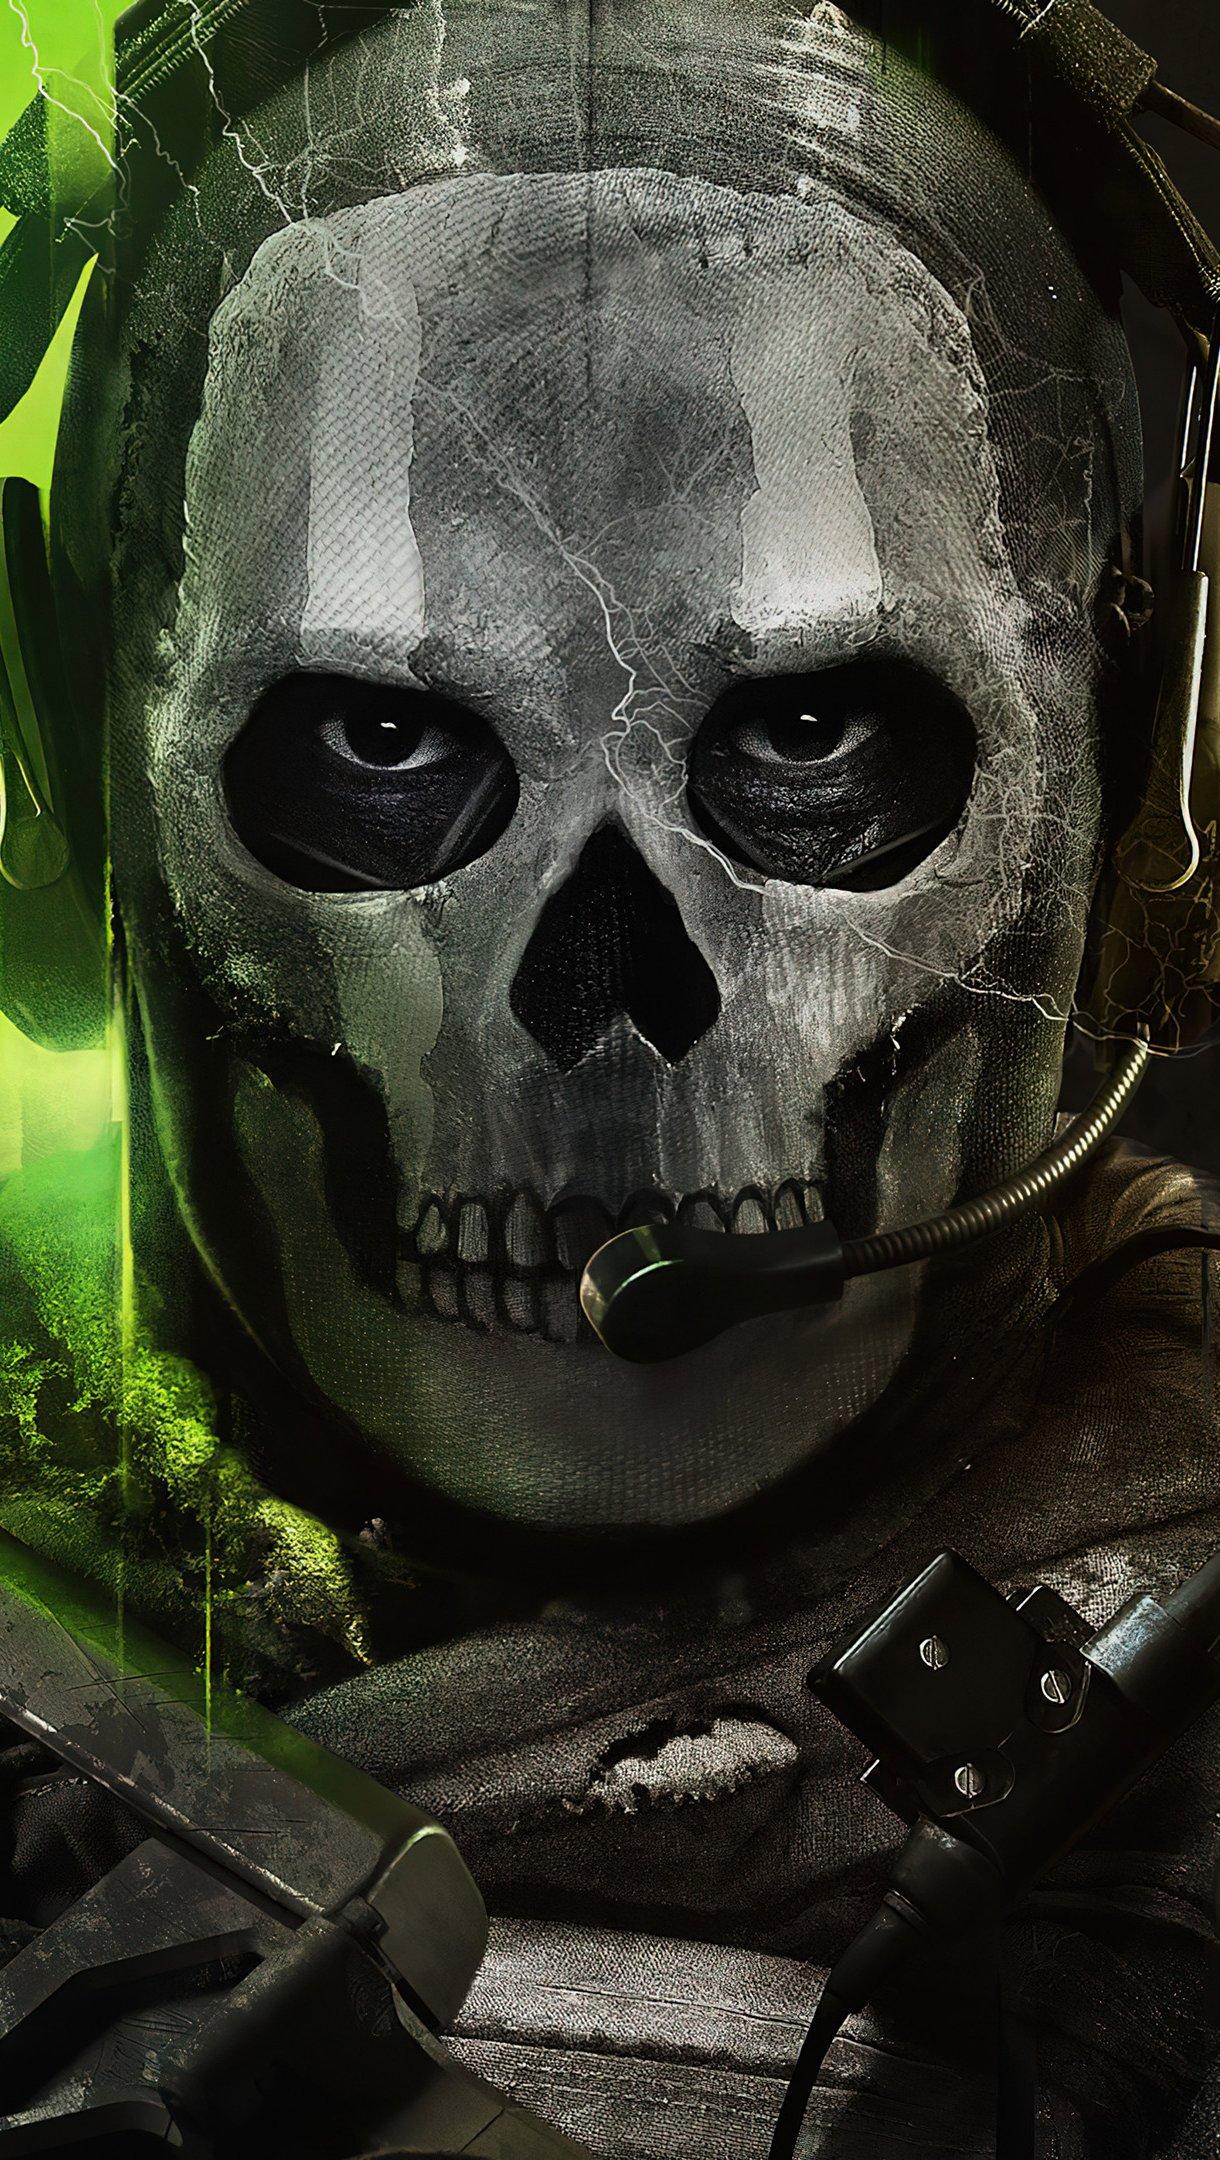 Simon Ghost Riley Call of Duty Modern Warfare 2 Wallpaper 4k Ultra HD  ID10255